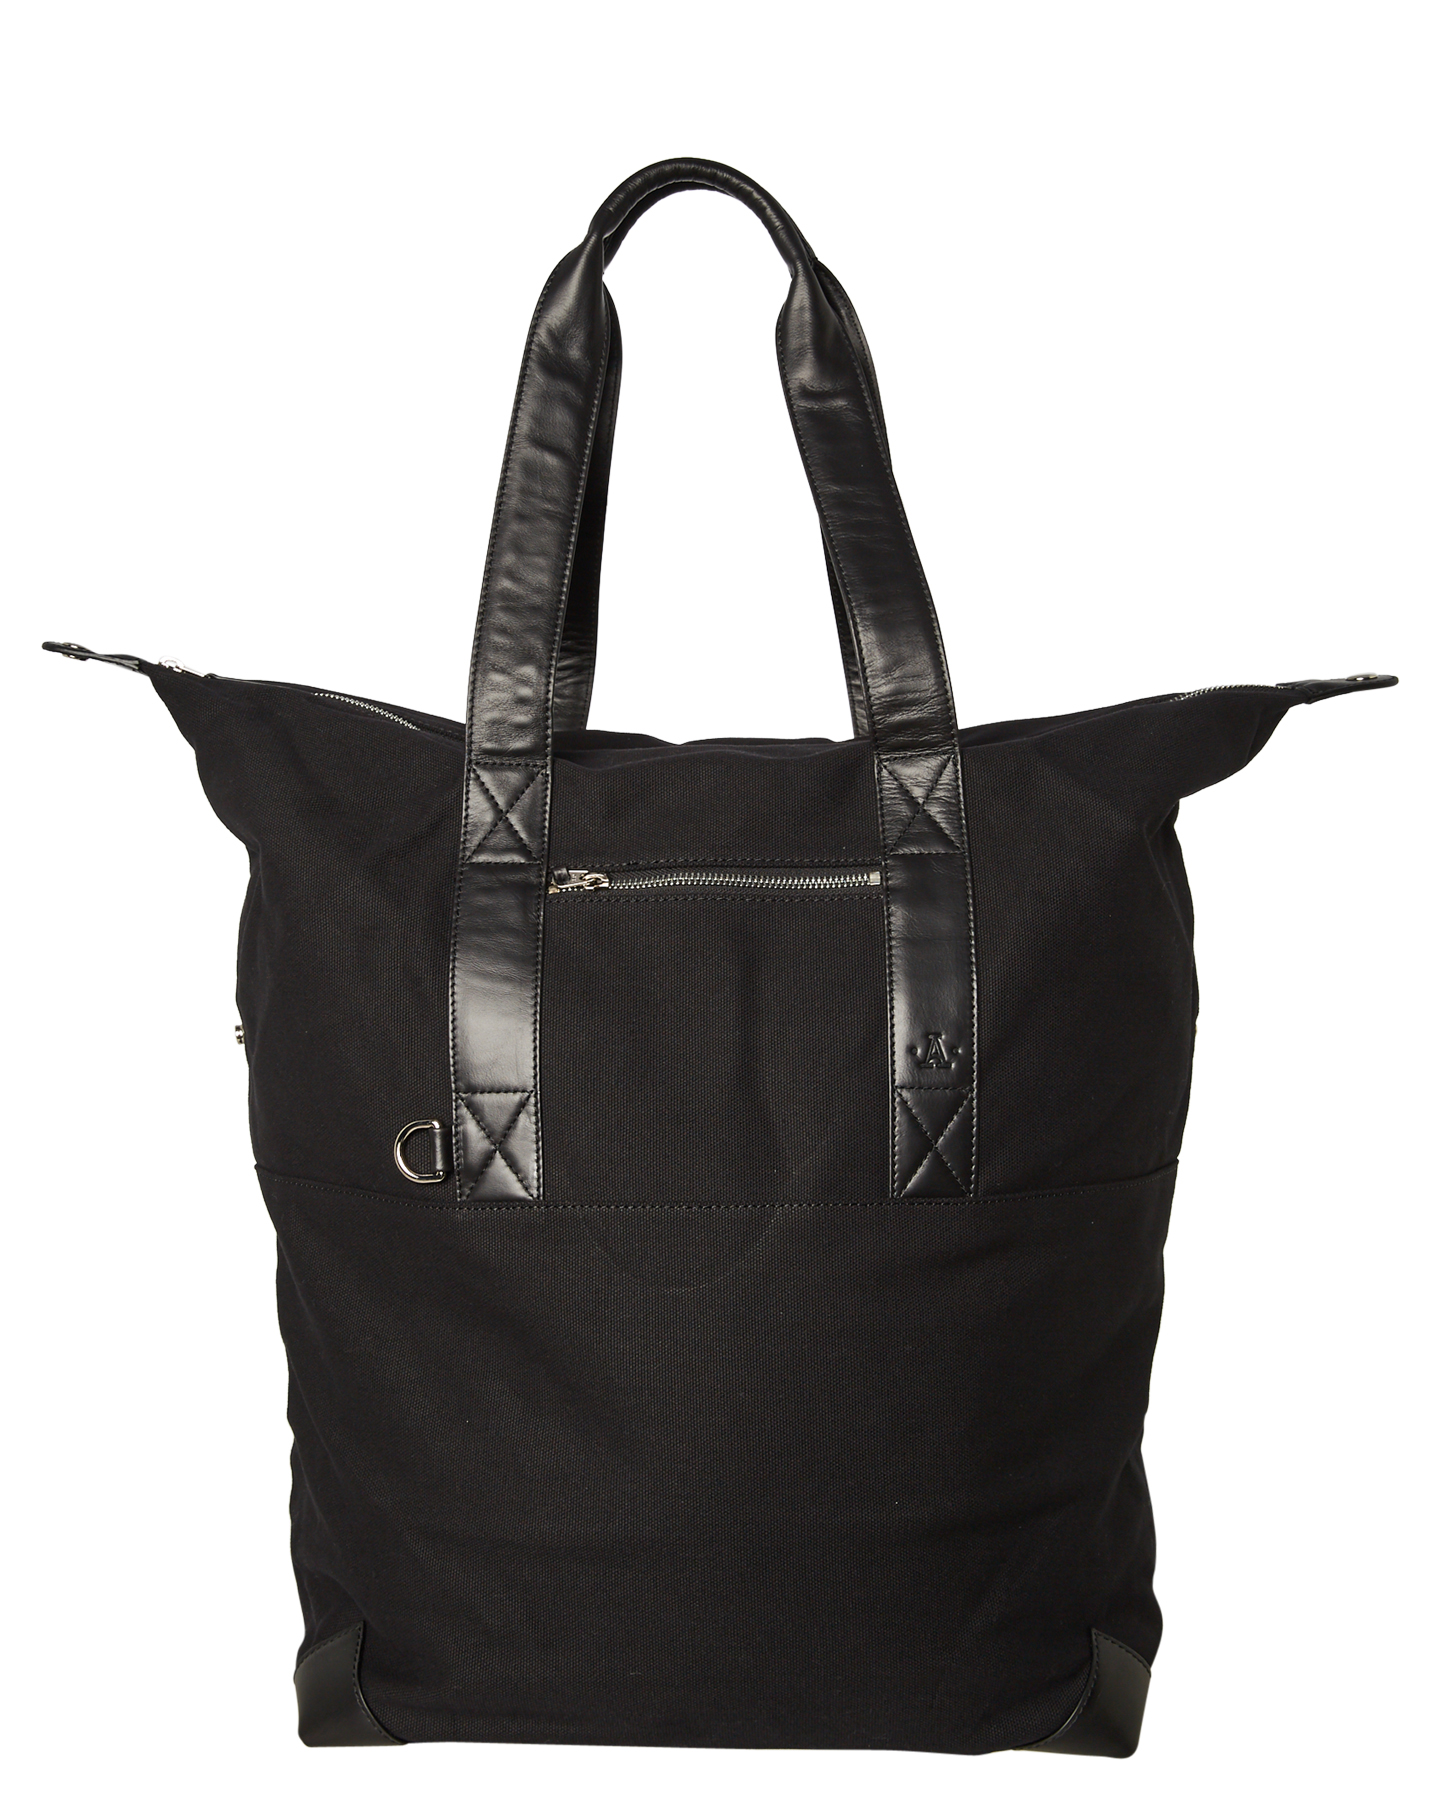 Atlas Lifestyle Co Canvas Leather Duffle Bag - Black | SurfStitch